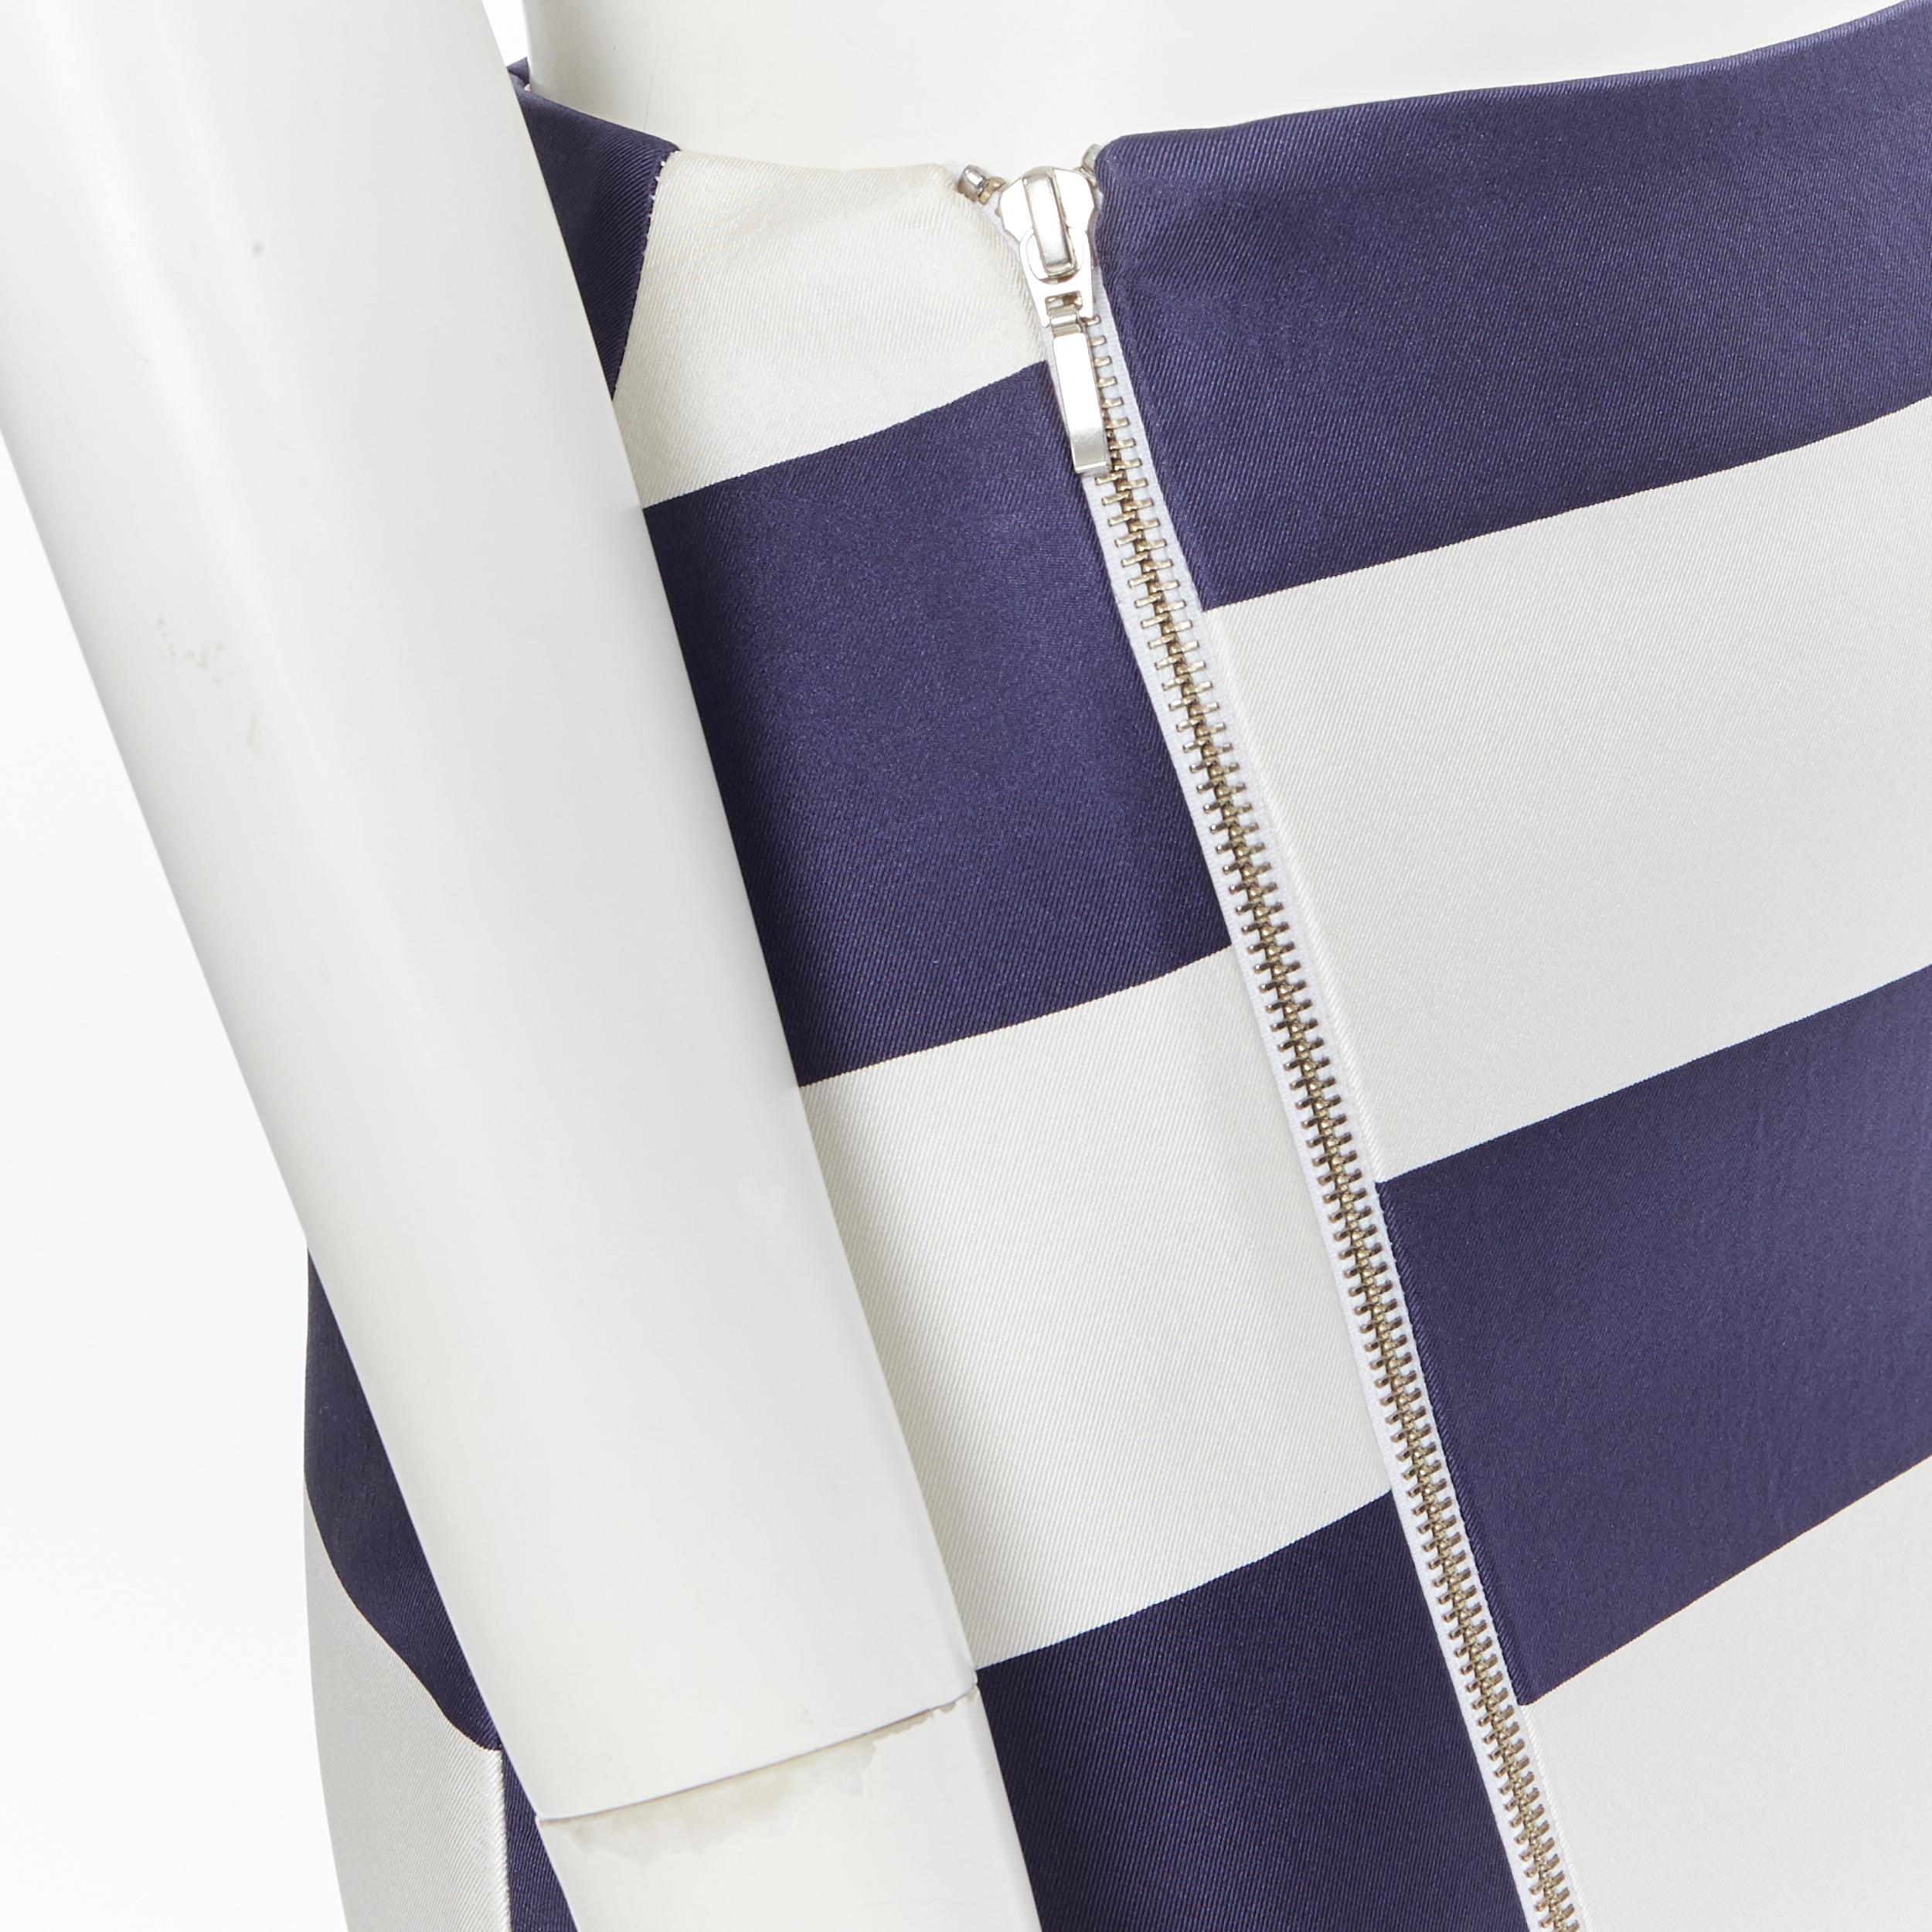 NICHOLAS 100% silk navy white striped asymmetric zip pencil skirt US2
Brand: Nicholas
Model Name / Style: Pencil skirt
Material: Silk
Color: Navy and white
Pattern: Striped
Closure: Zip
Extra Detail: Silver-tone hardware. Vent at front. Pencil